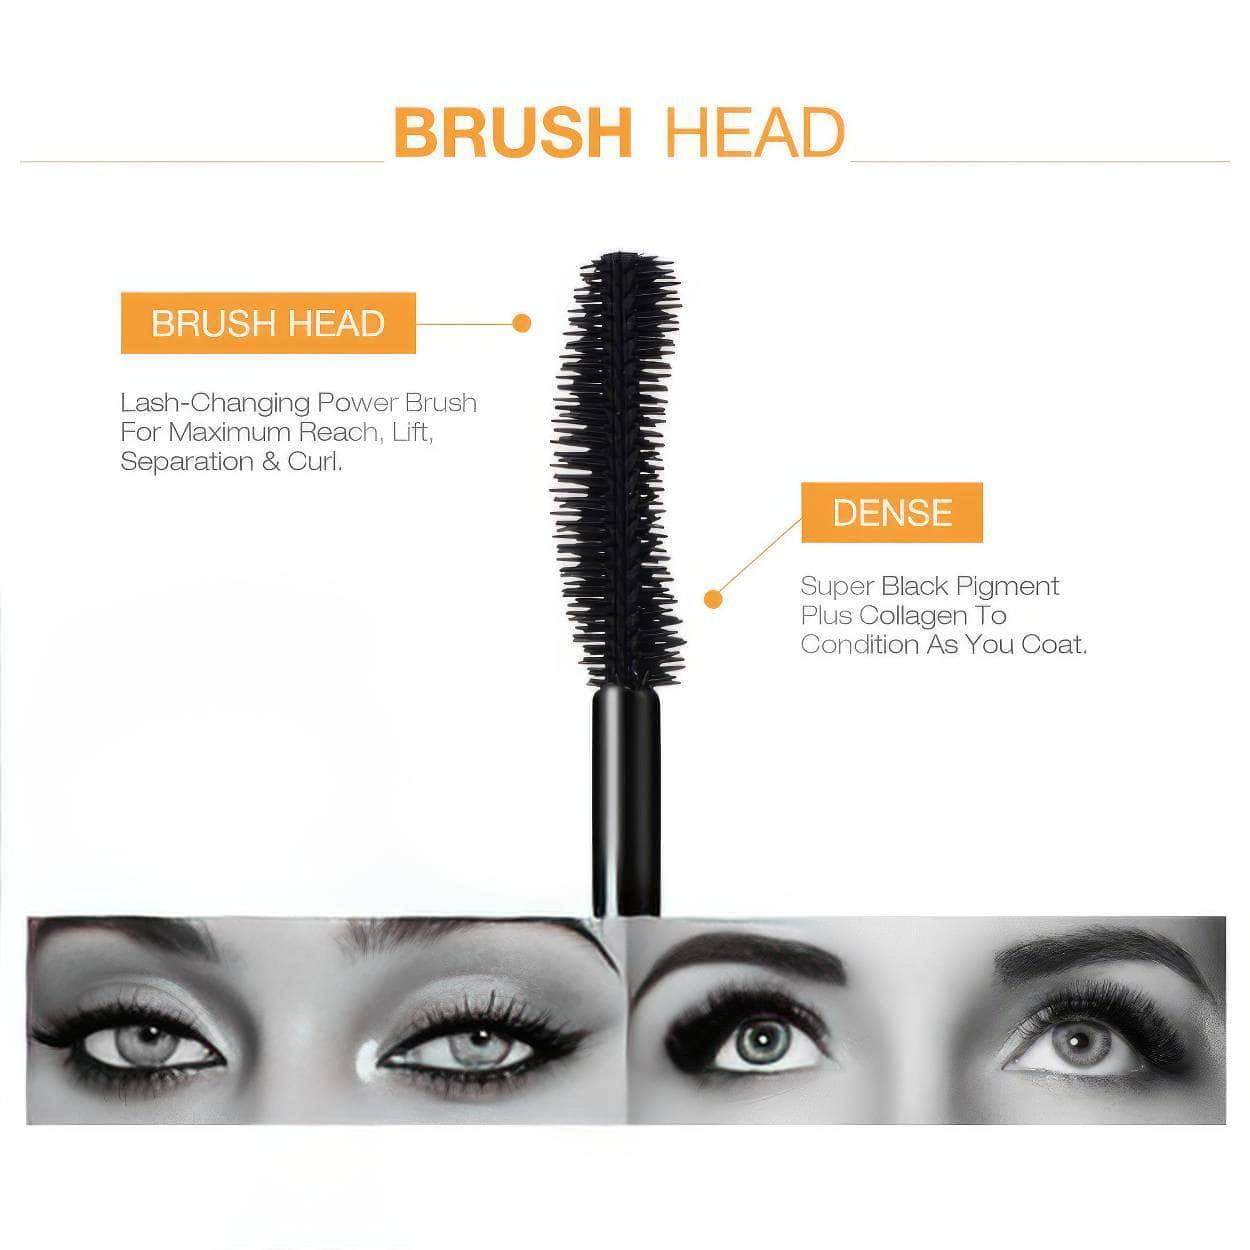 3D Fiber Lashes Mascara: Thick, Lengthening, Long Black Lash, Eyelash Extension - Pro Eye Makeup, Eye-Cosmetics